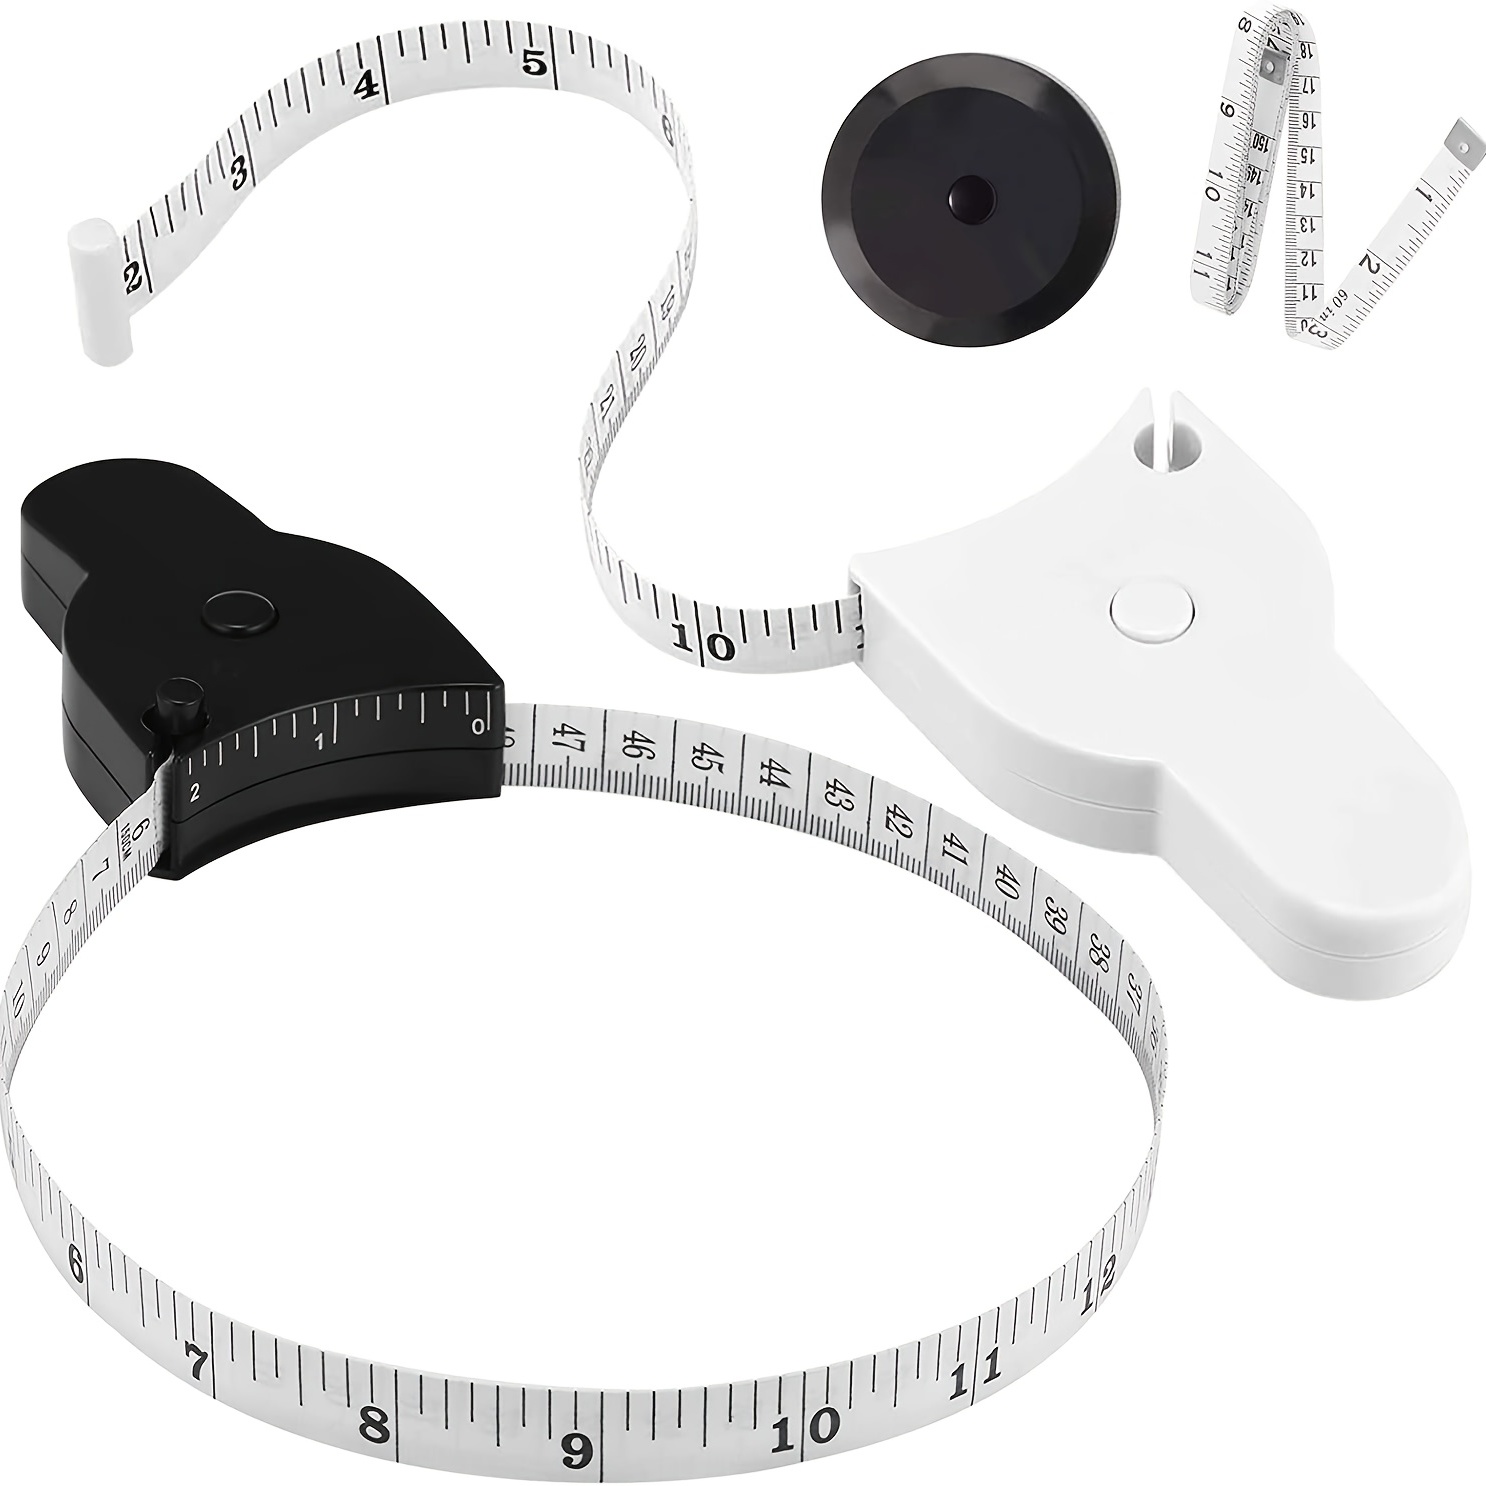 OSALADI 6pcs Tape Measure Body Measuring Tape Retractable Measure